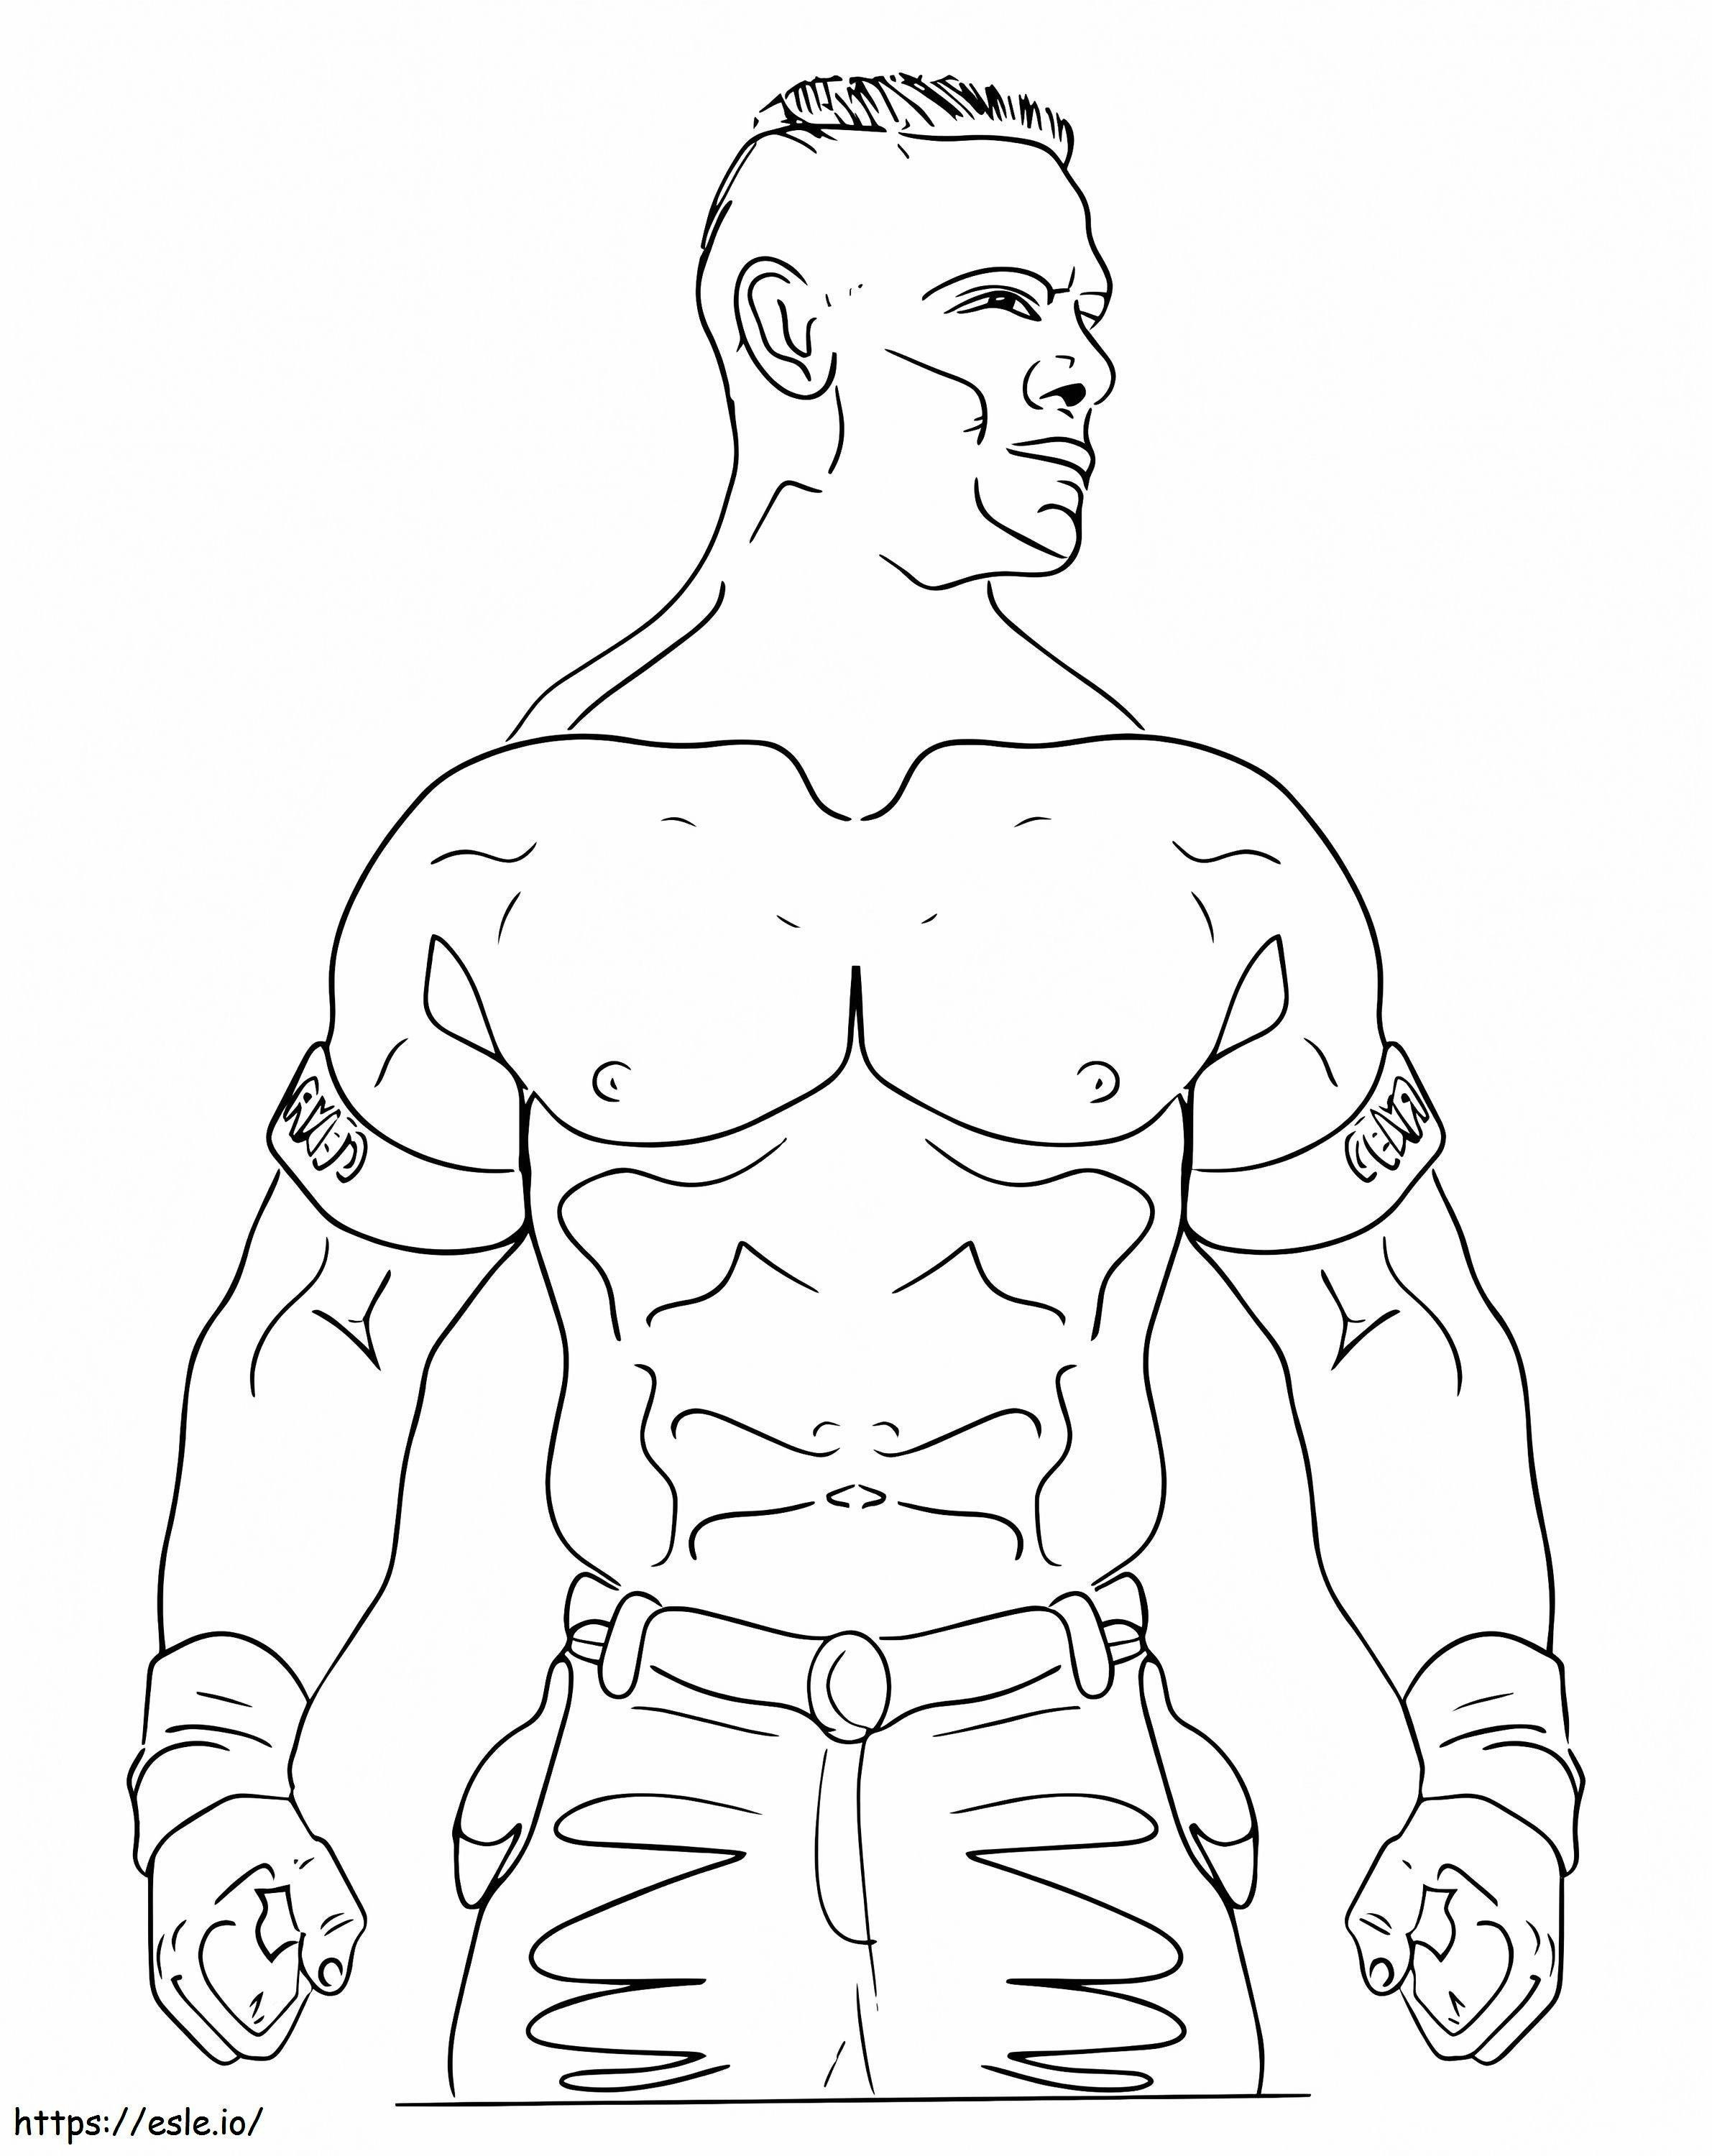 John Cena 3 coloring page